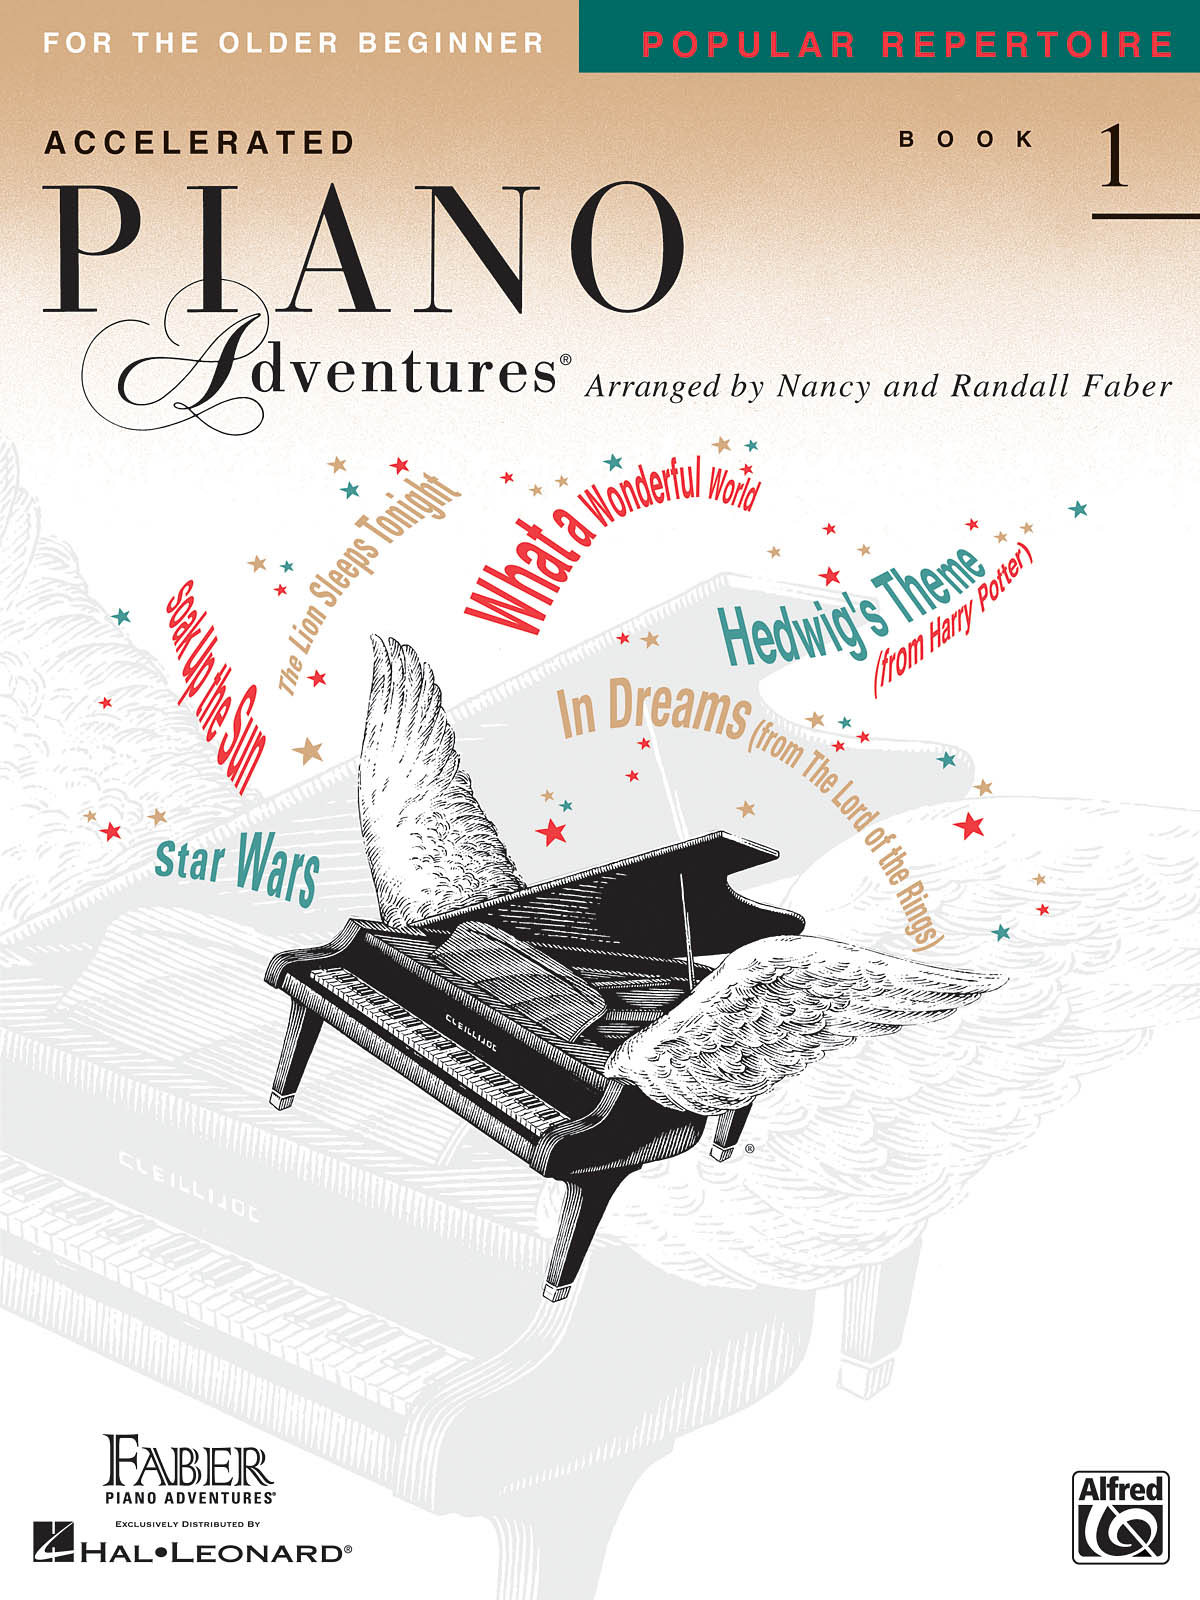 Piano Adventures for the Older Beginner - Popular Repertoire Book 1 - škola hry na klavír